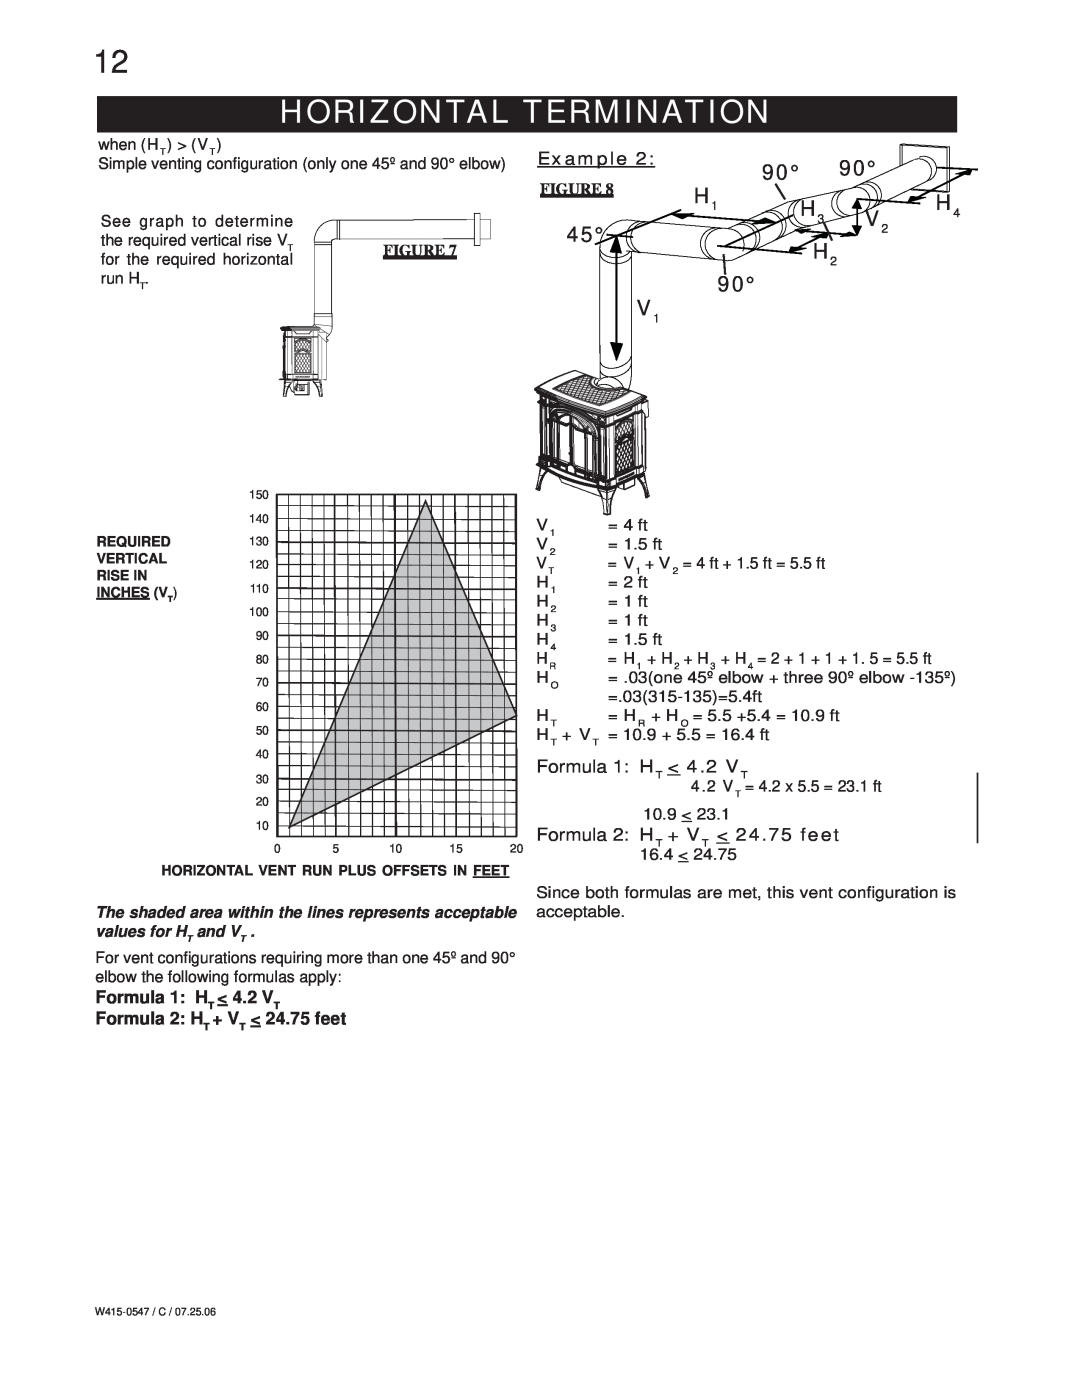 Napoleon Fireplaces GDS25N, GDS25P manual Horizontal Termination, Example, Formula 2 HT + VT 24.75 feet, Ht + Vt 